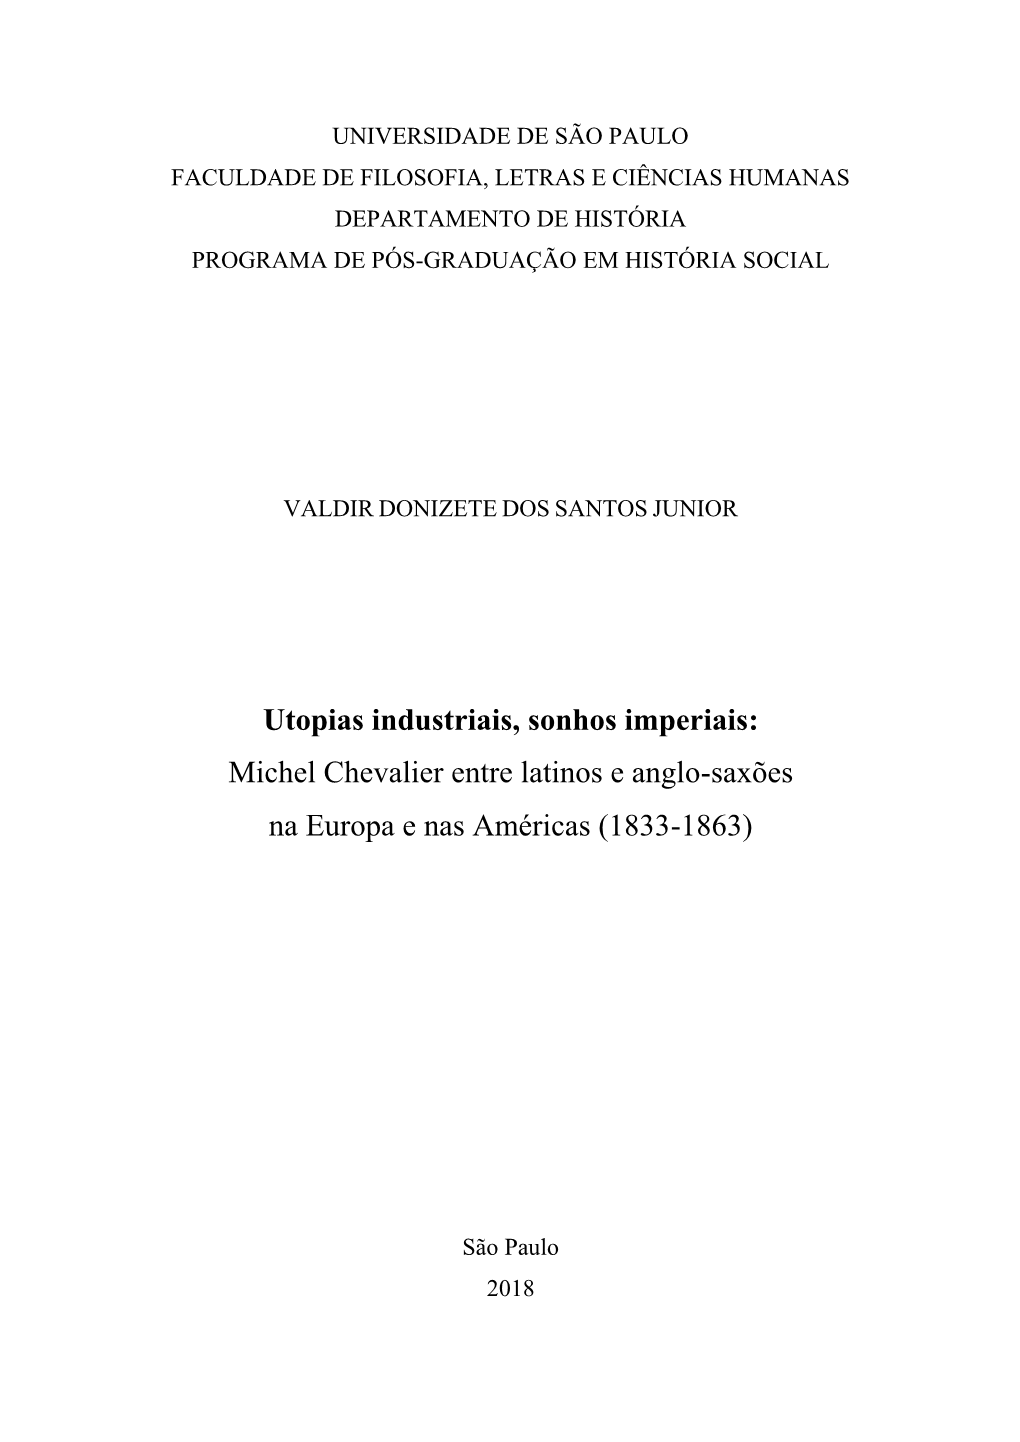 Utopias Industriais, Sonhos Imperiais: Michel Chevalier Entre Latinos E Anglo-Saxões